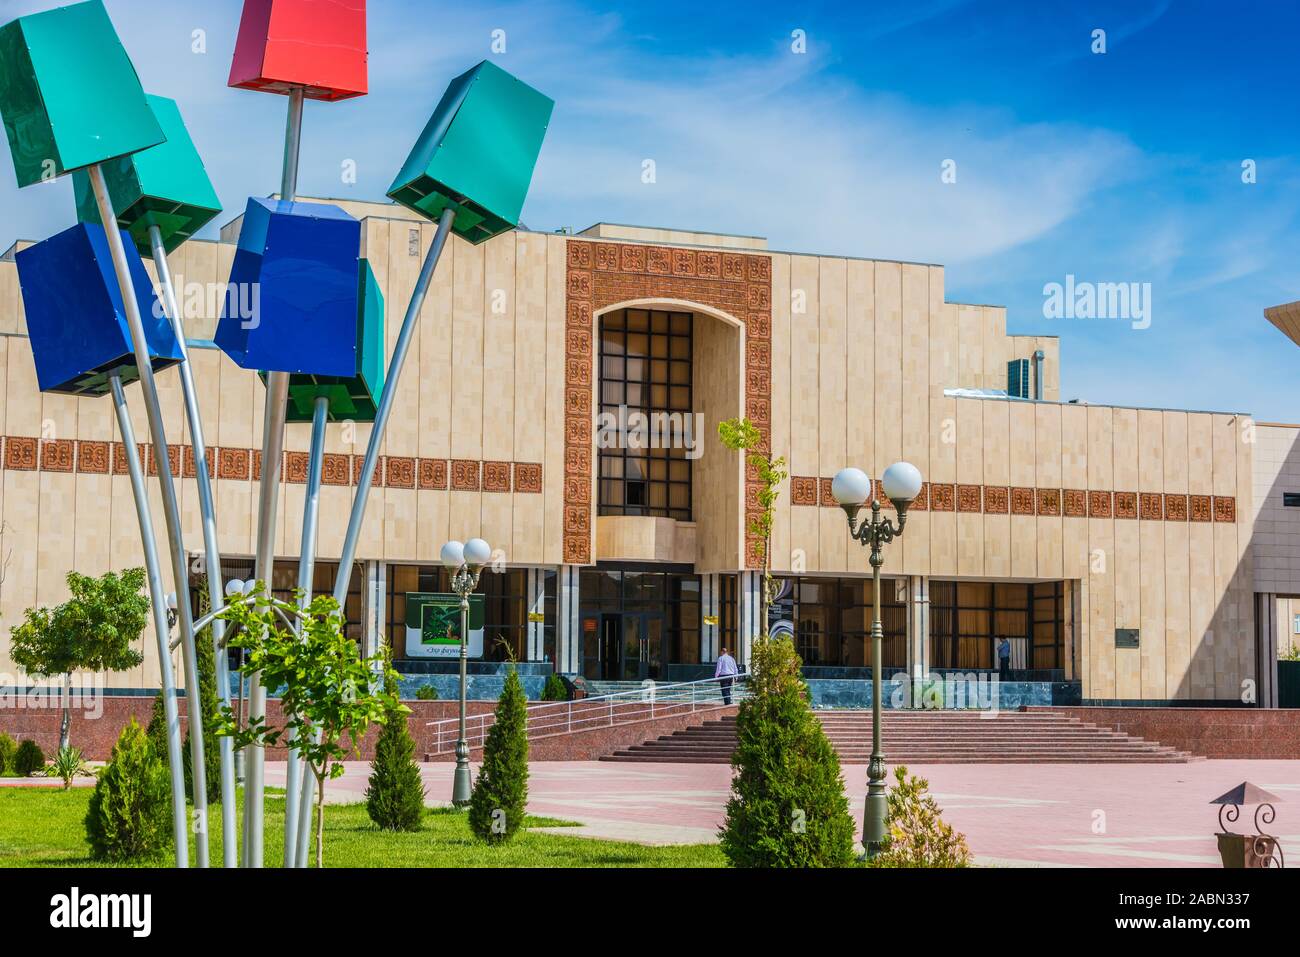 NUKUS, UZBEKISTAN - MAY 6, 2019: The State Art Museum of the Republic of Karakalpakstan in Nukus, Uzbekistan Stock Photo